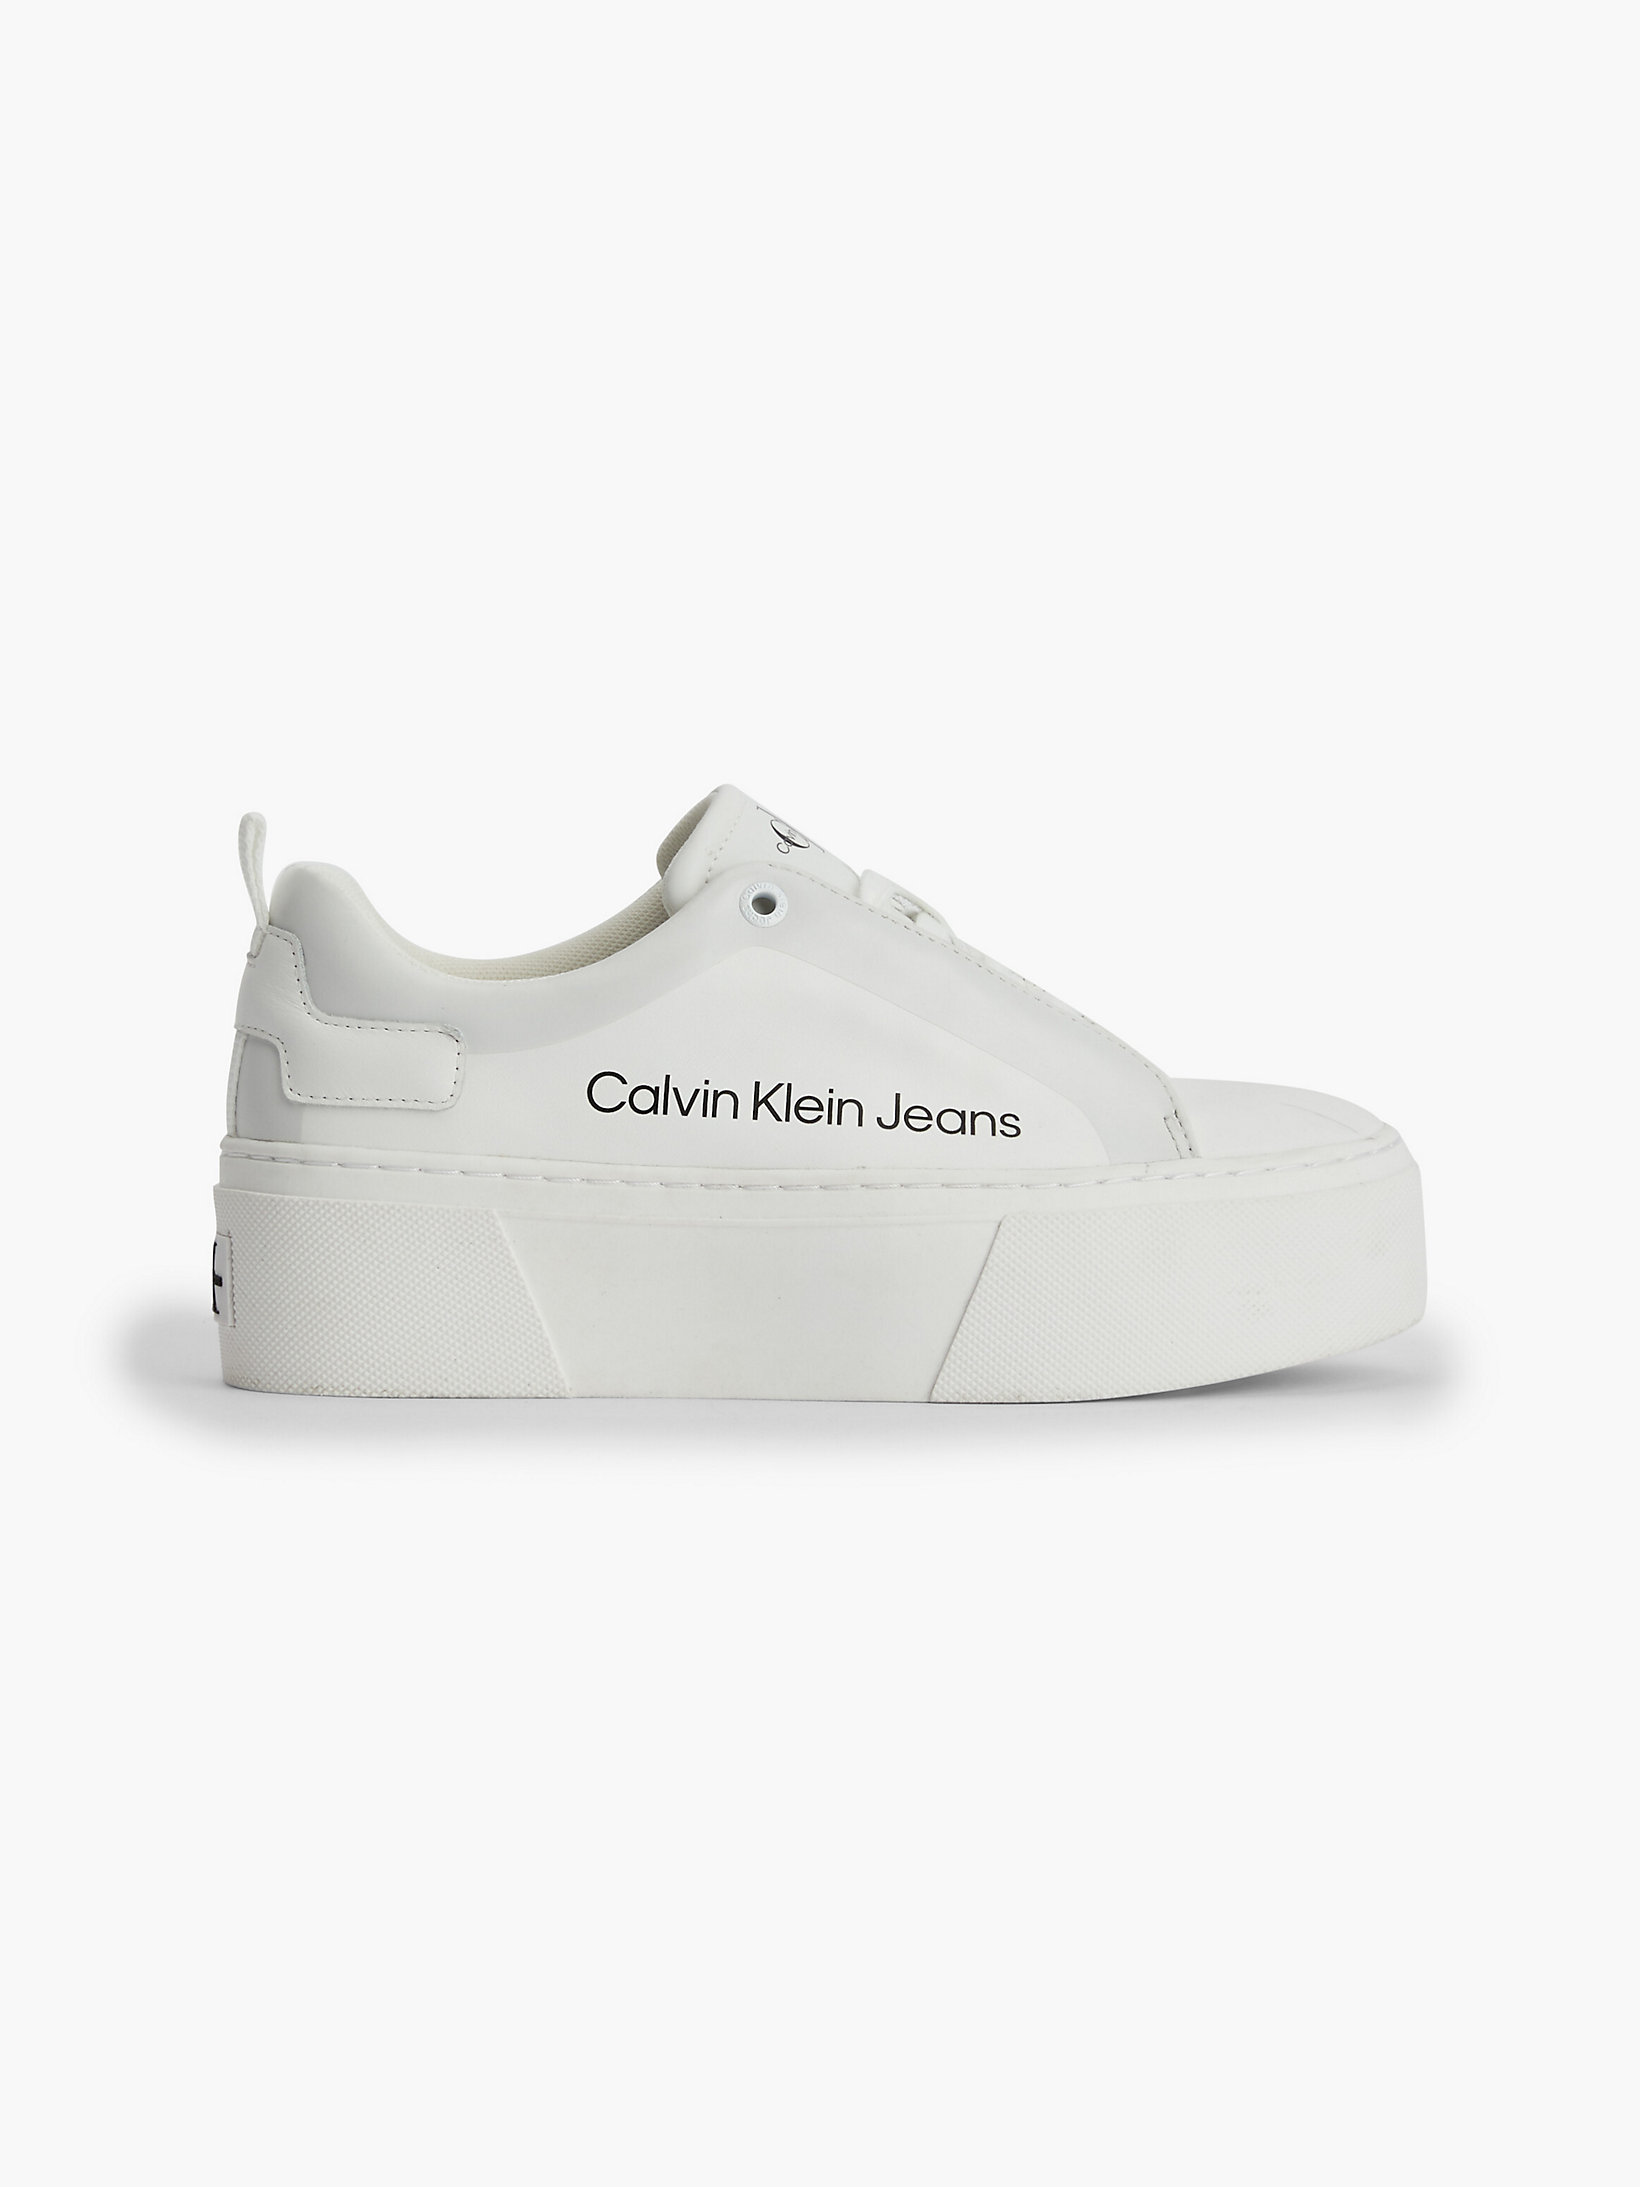 Sneaker Con Plateau In Pelle > Bright White > undefined donna > Calvin Klein